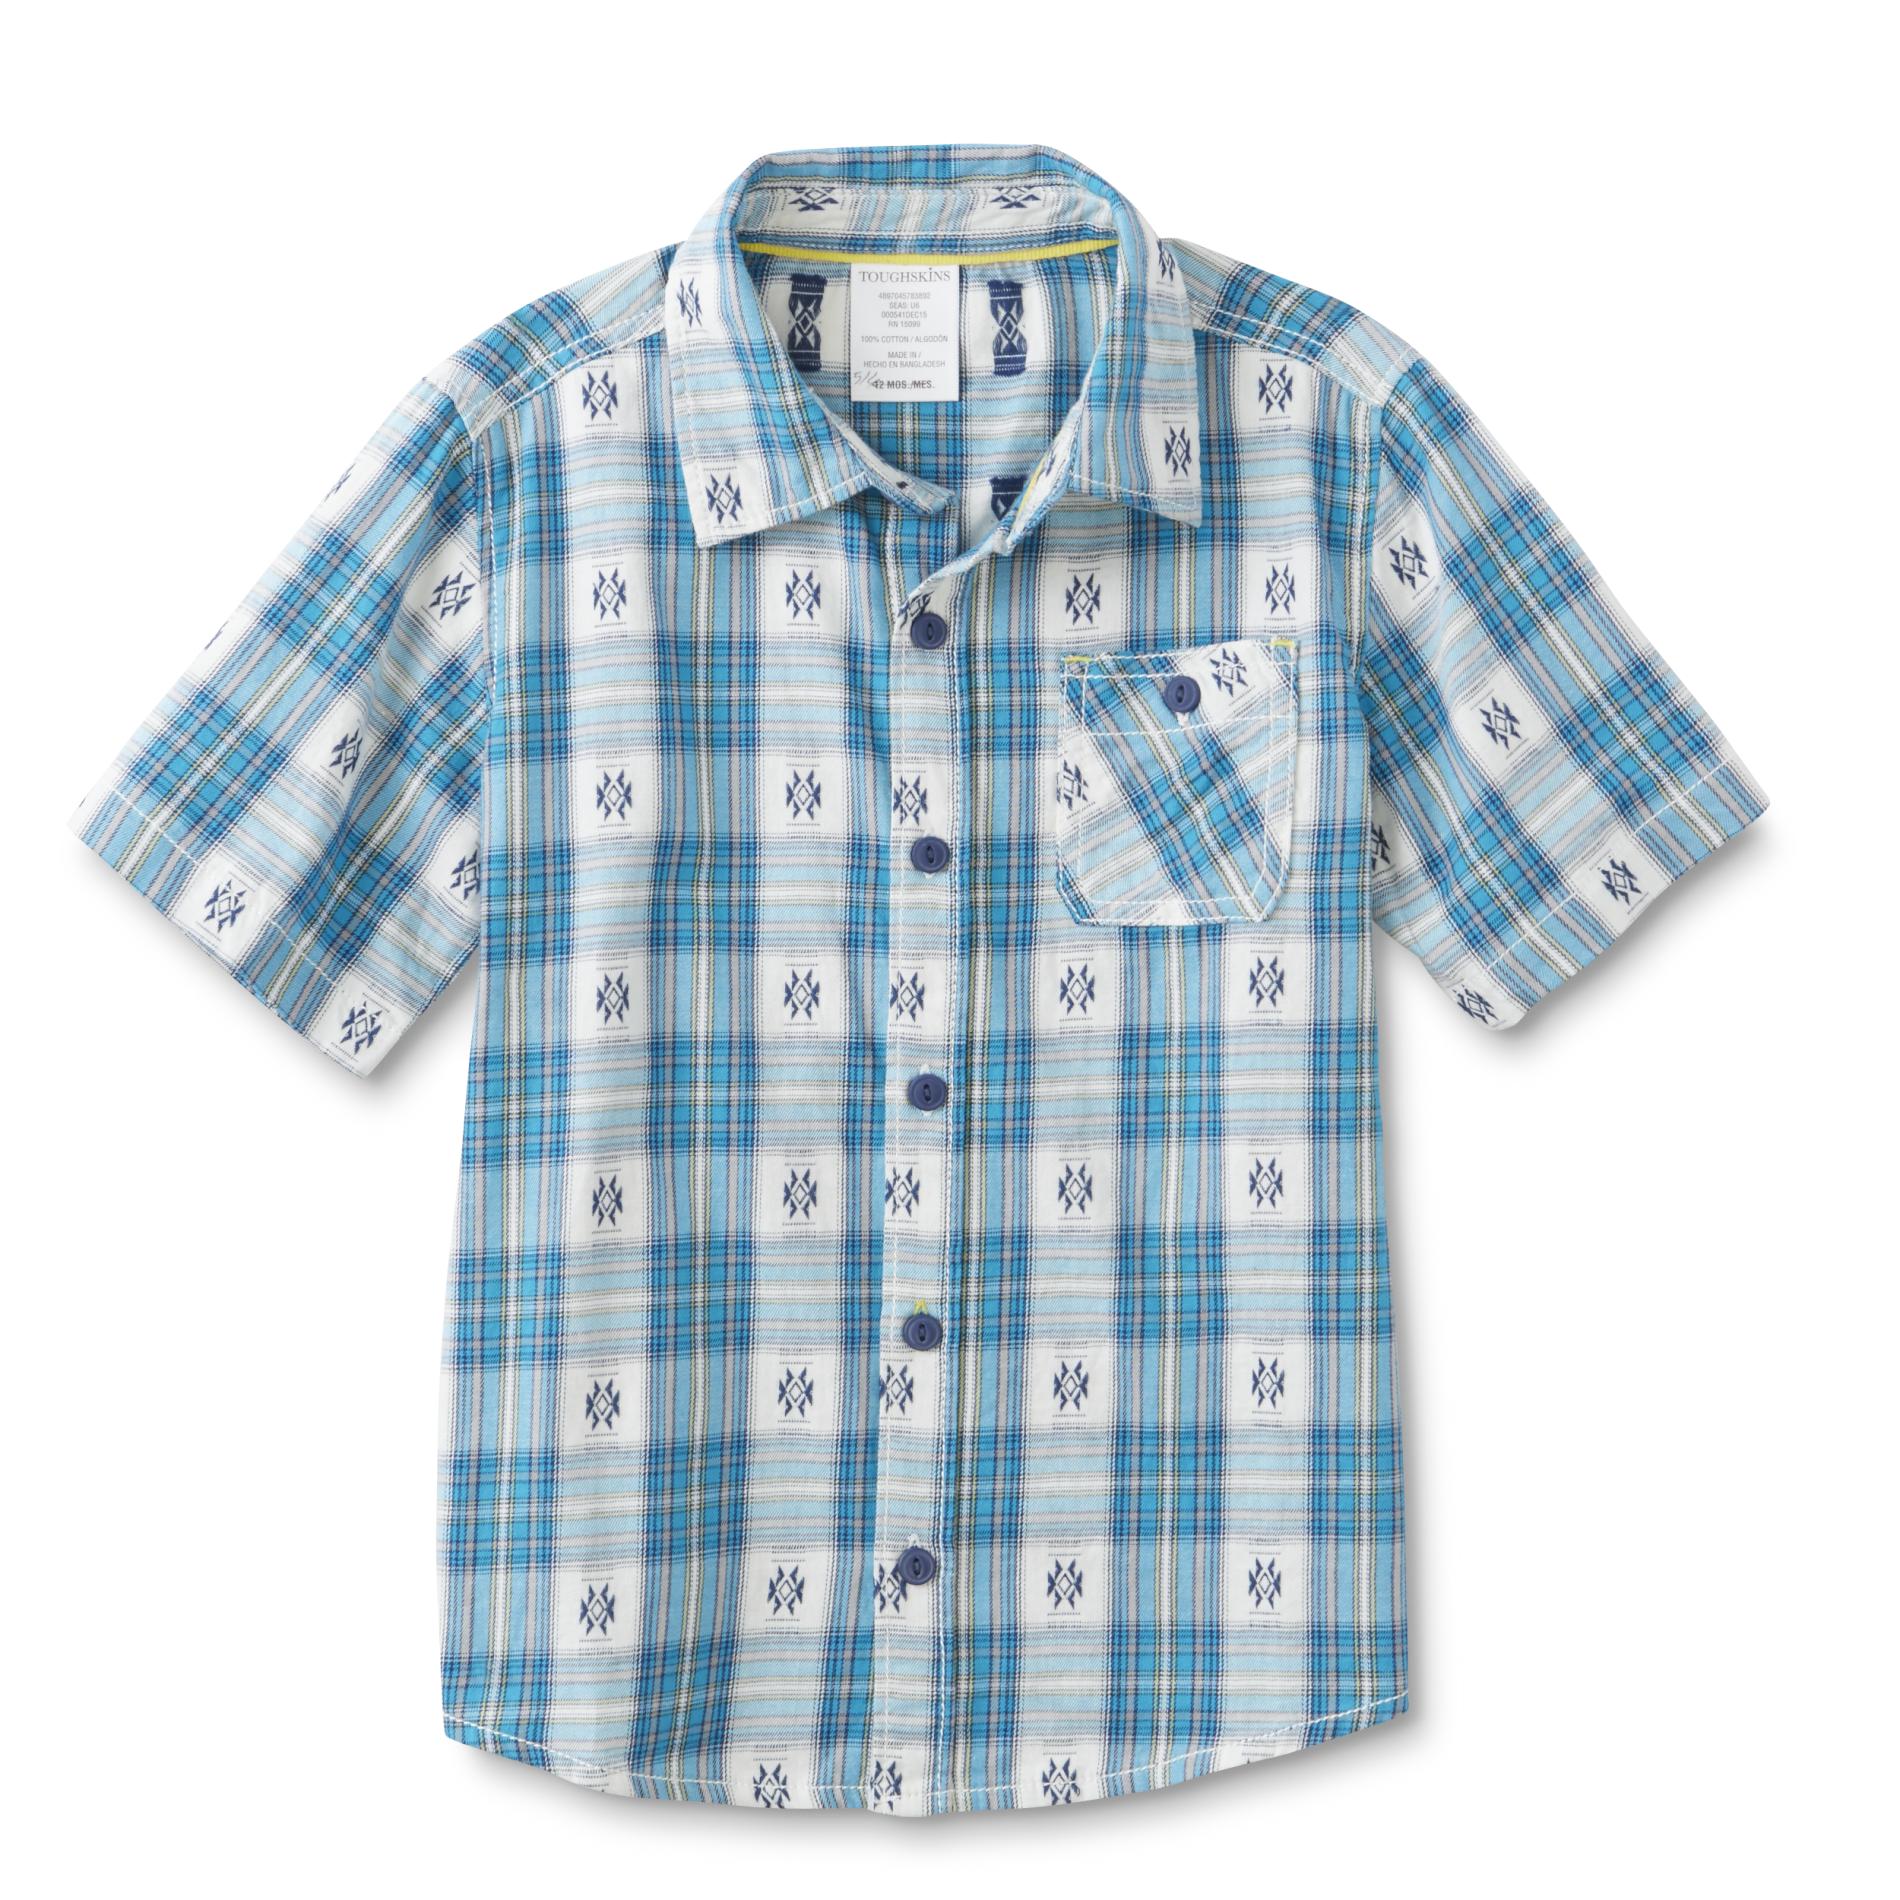 Toughskins Boy's Button-Front Shirt - Plaid & Tribal